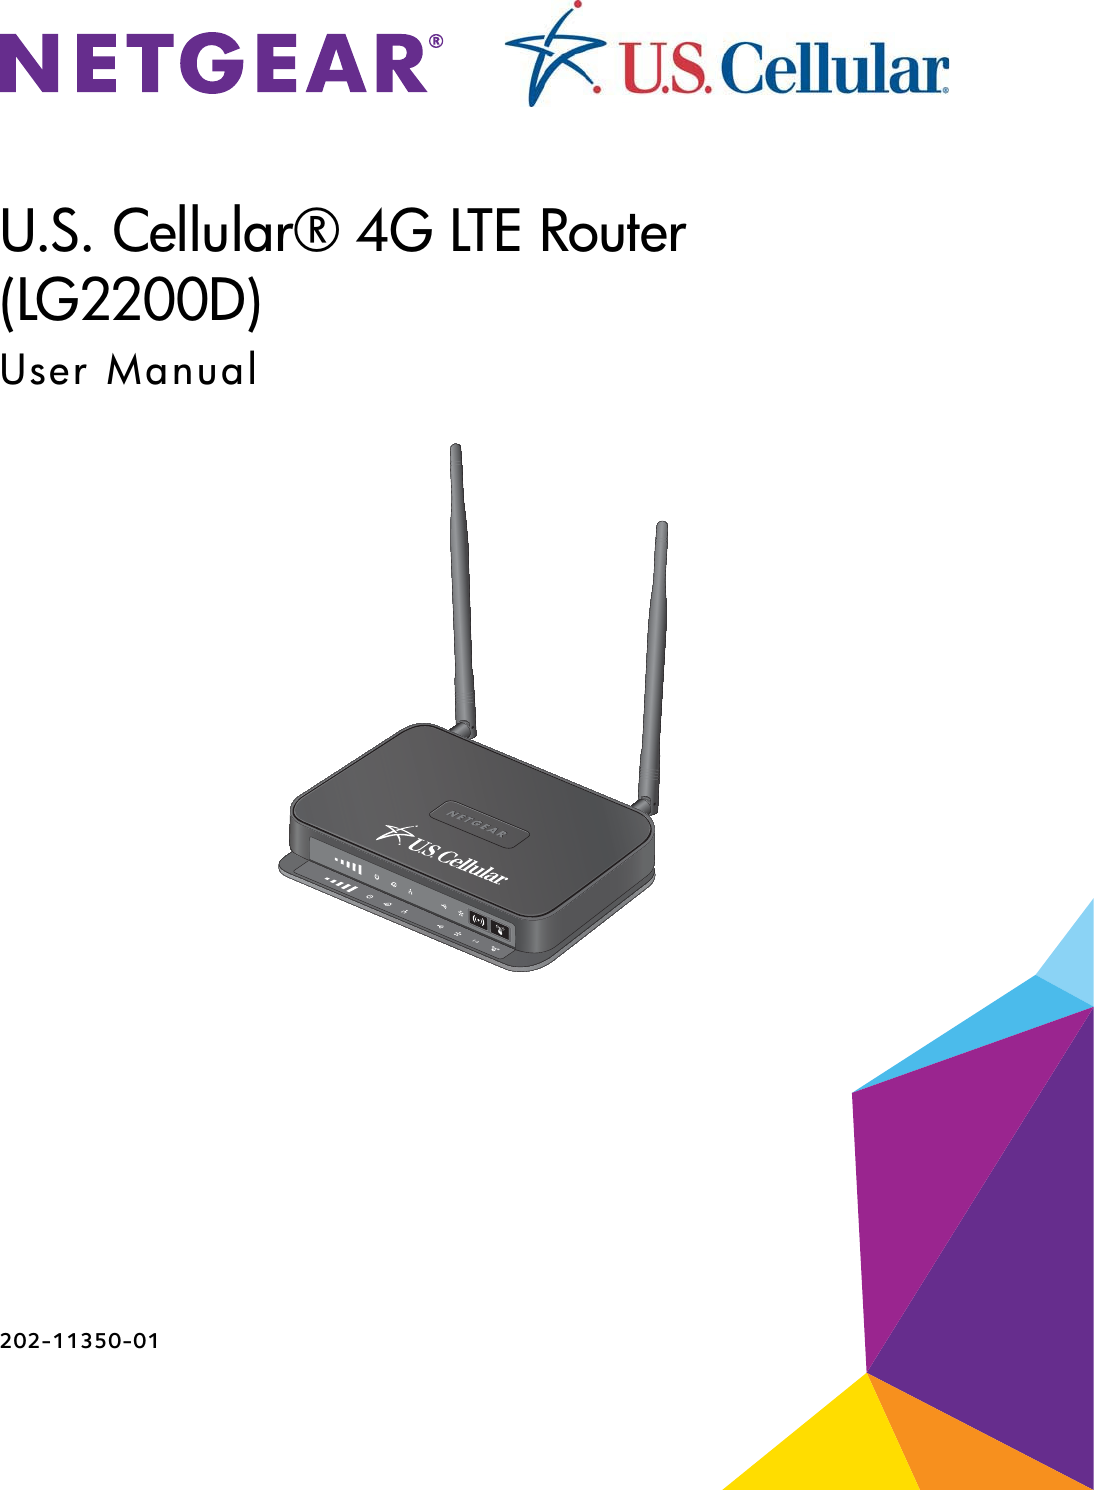 202-11350-01U.S. Cellular® 4G LTE Router (LG2200D)User Manual